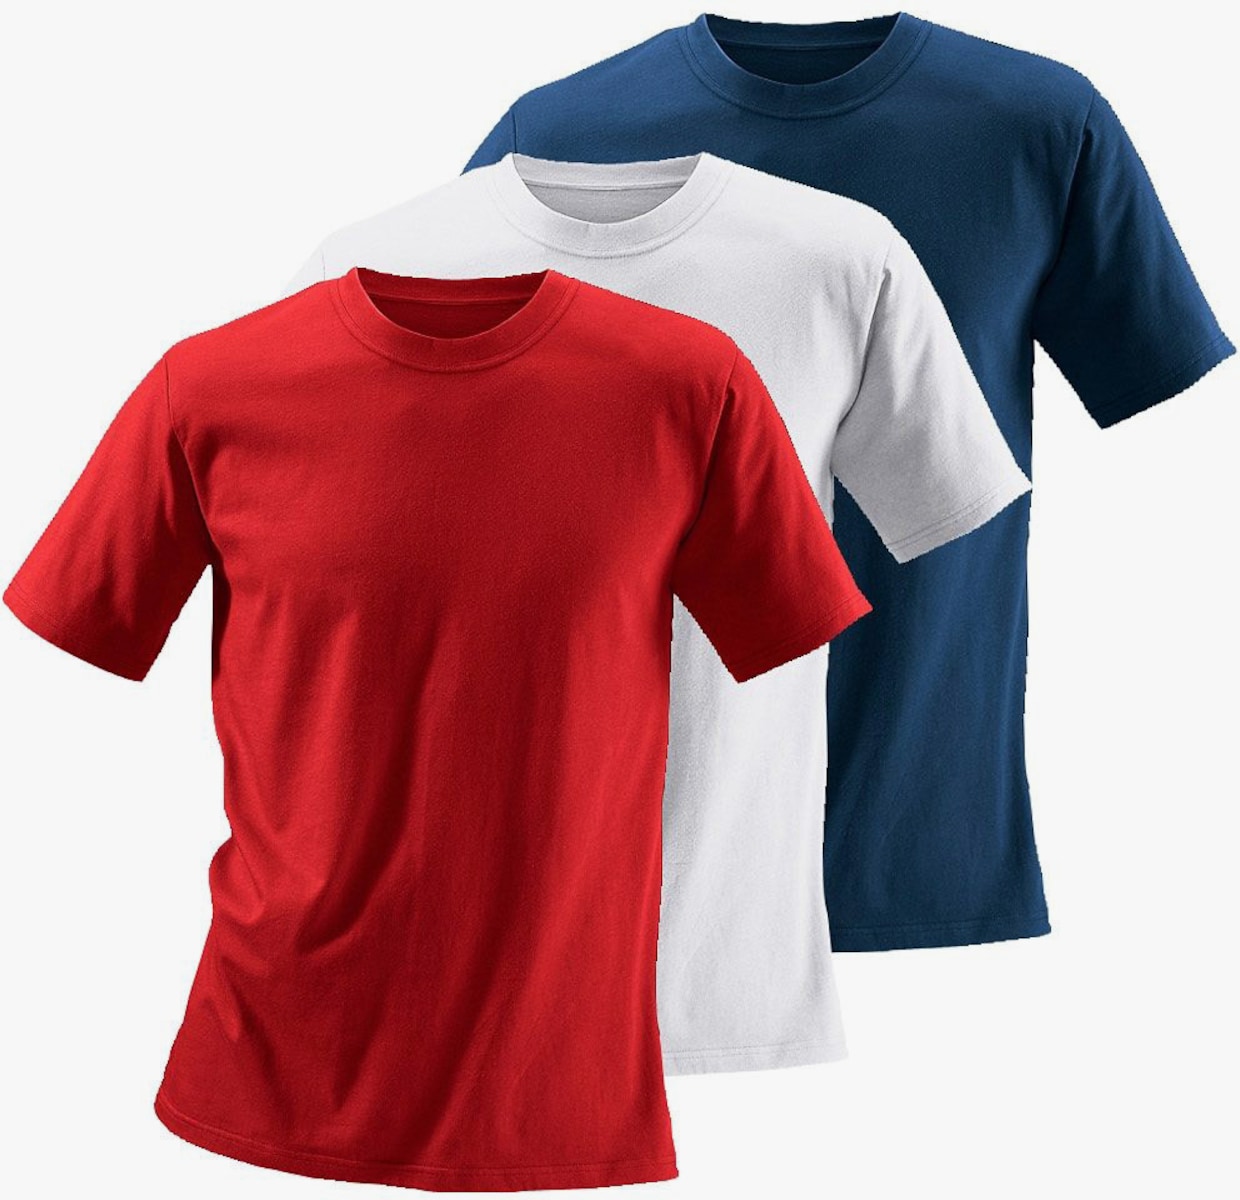 H.I.S T-Shirt - weiß, rot, marine